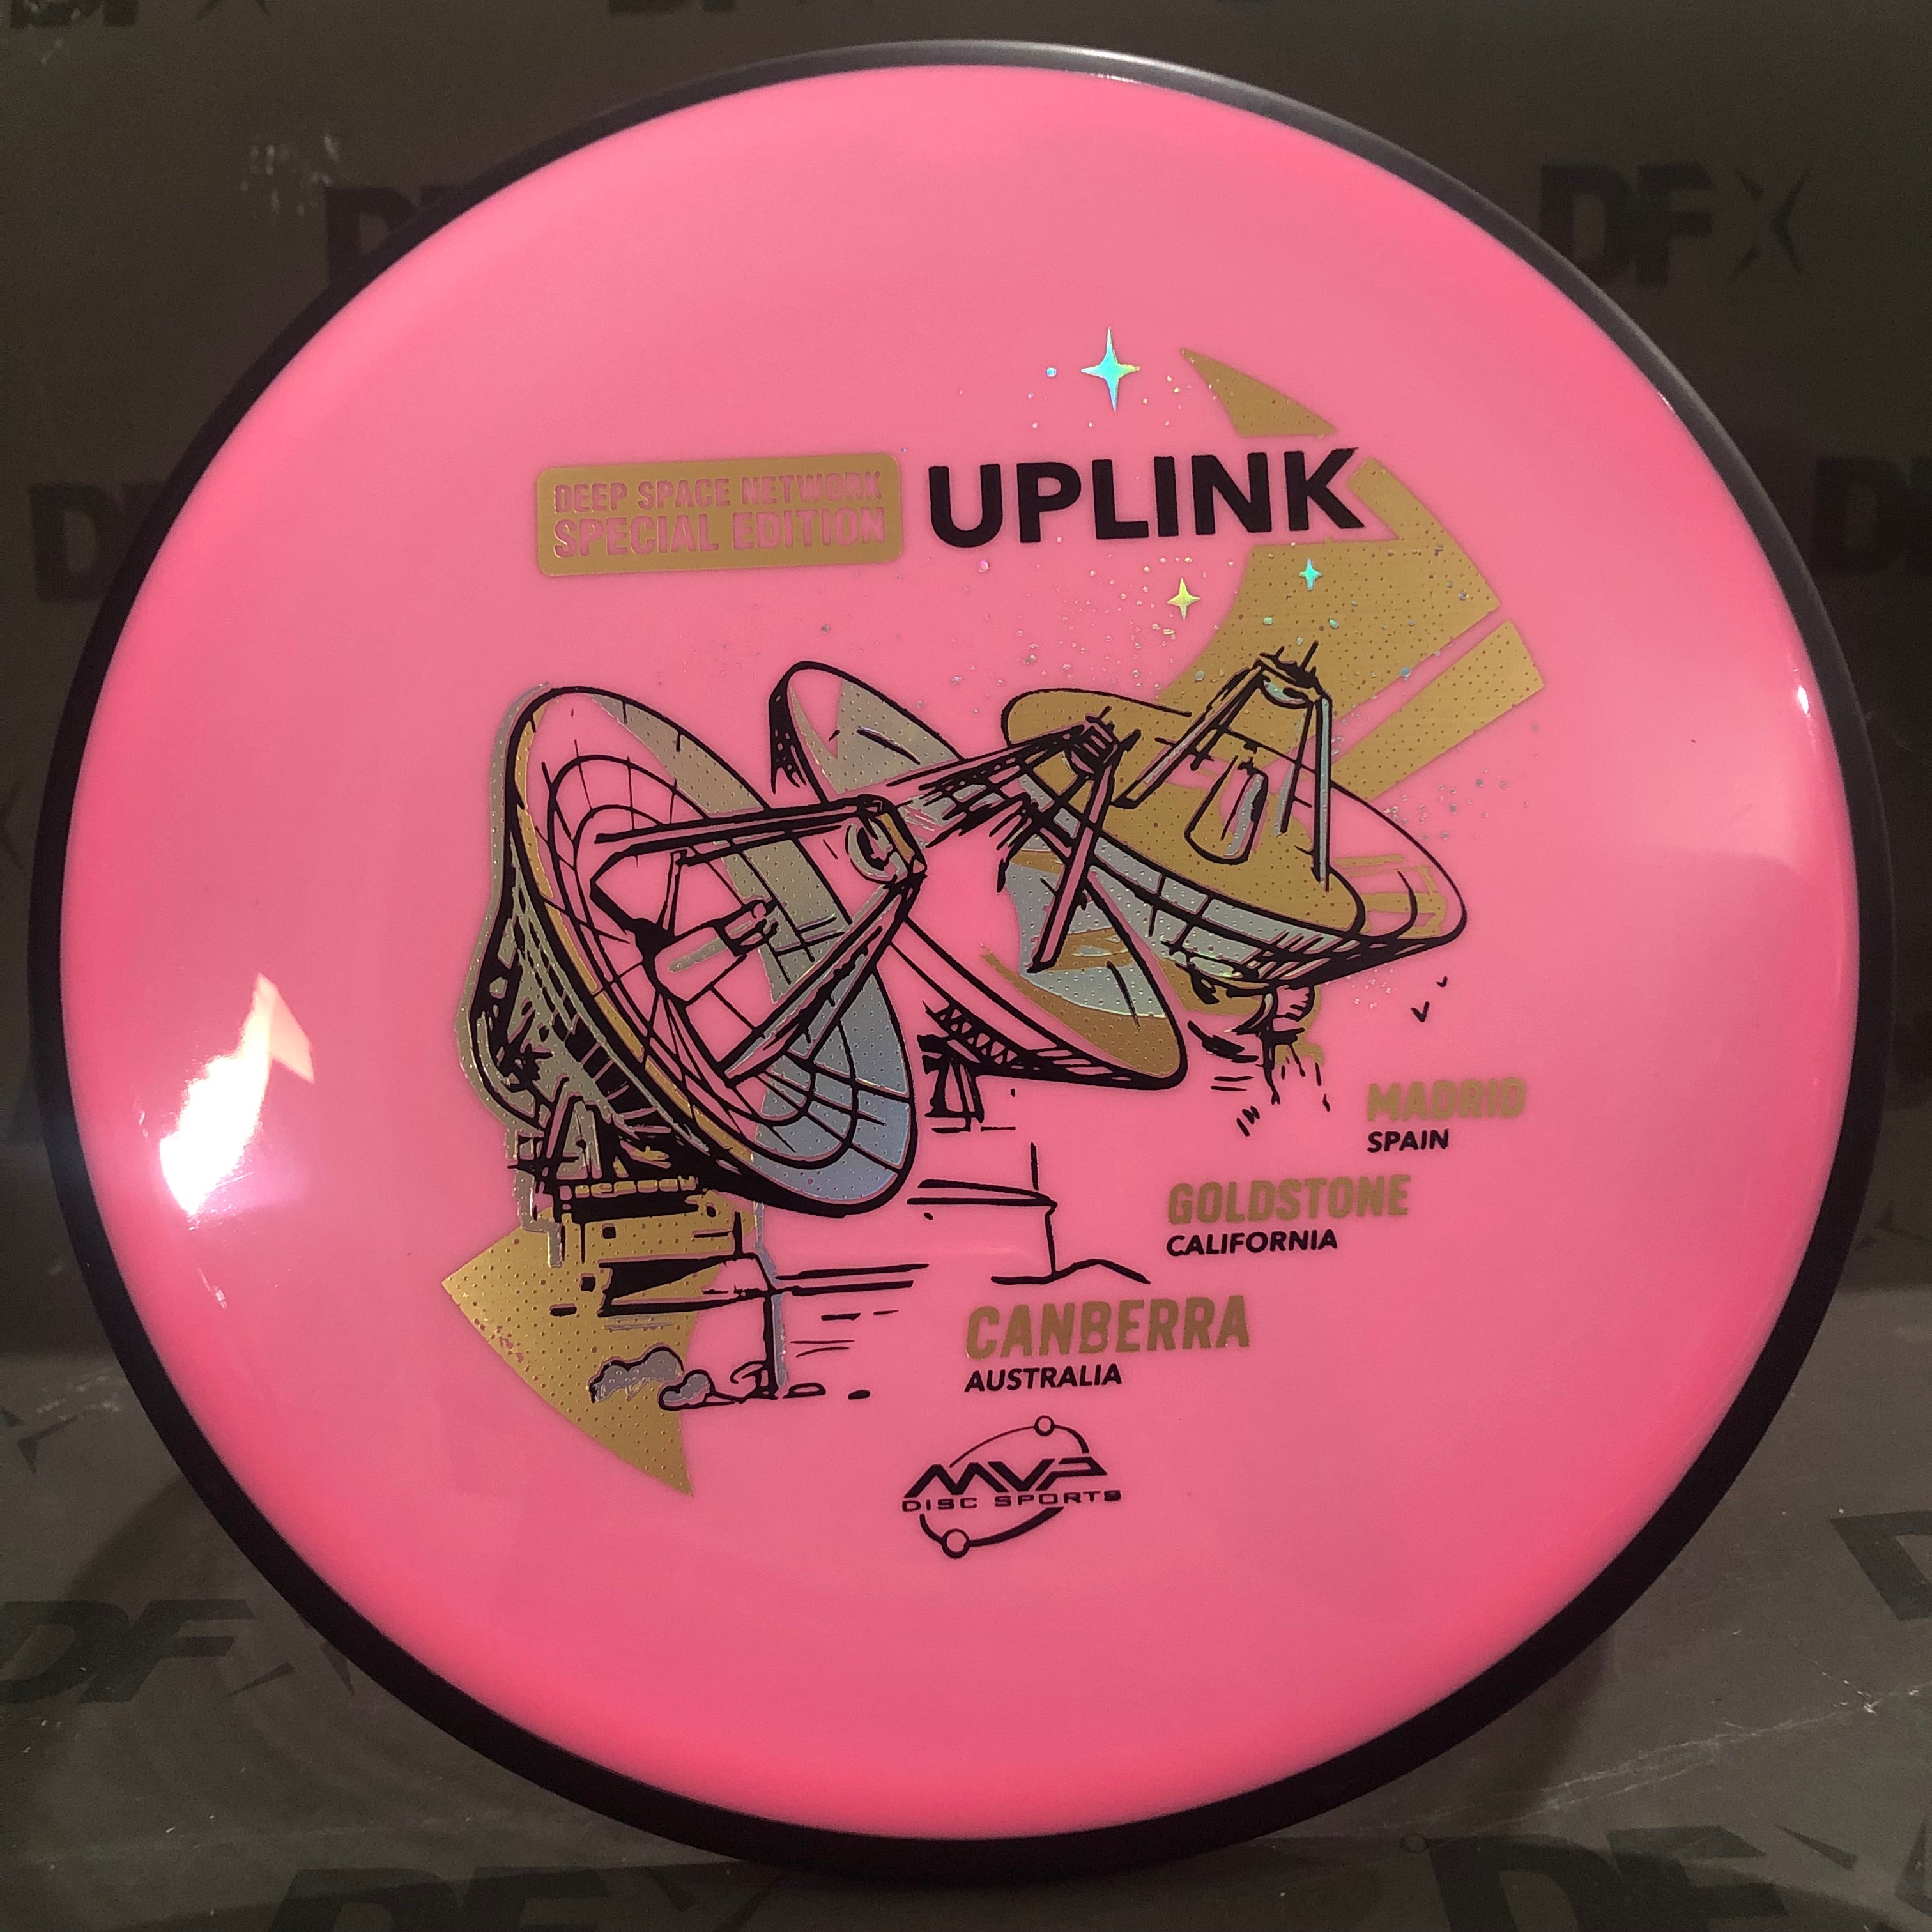 MVP Soft Neutron Uplink - Special Edition